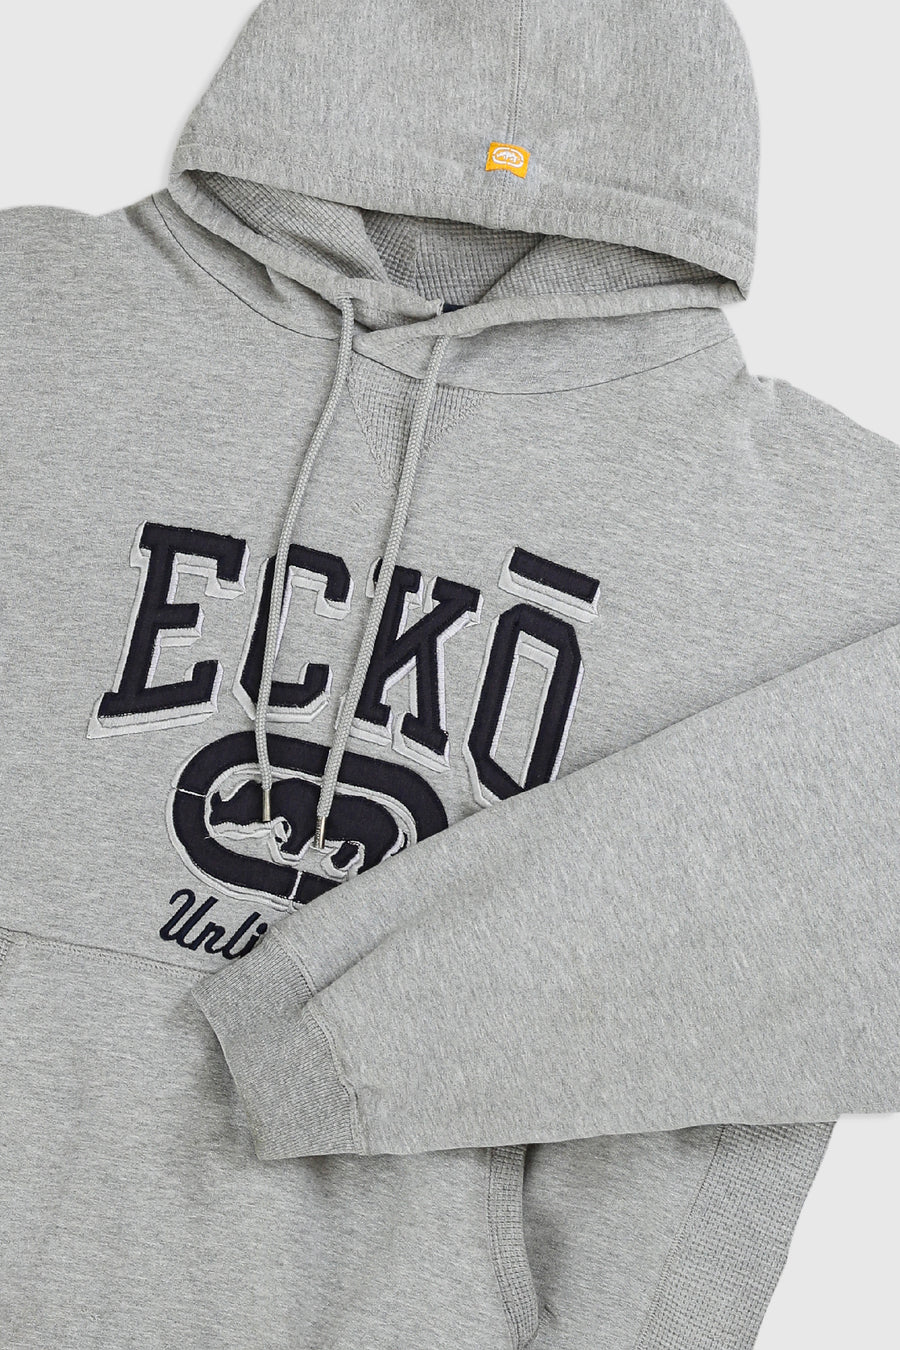 Vintage Ecko Hooded Sweatshirt - XL